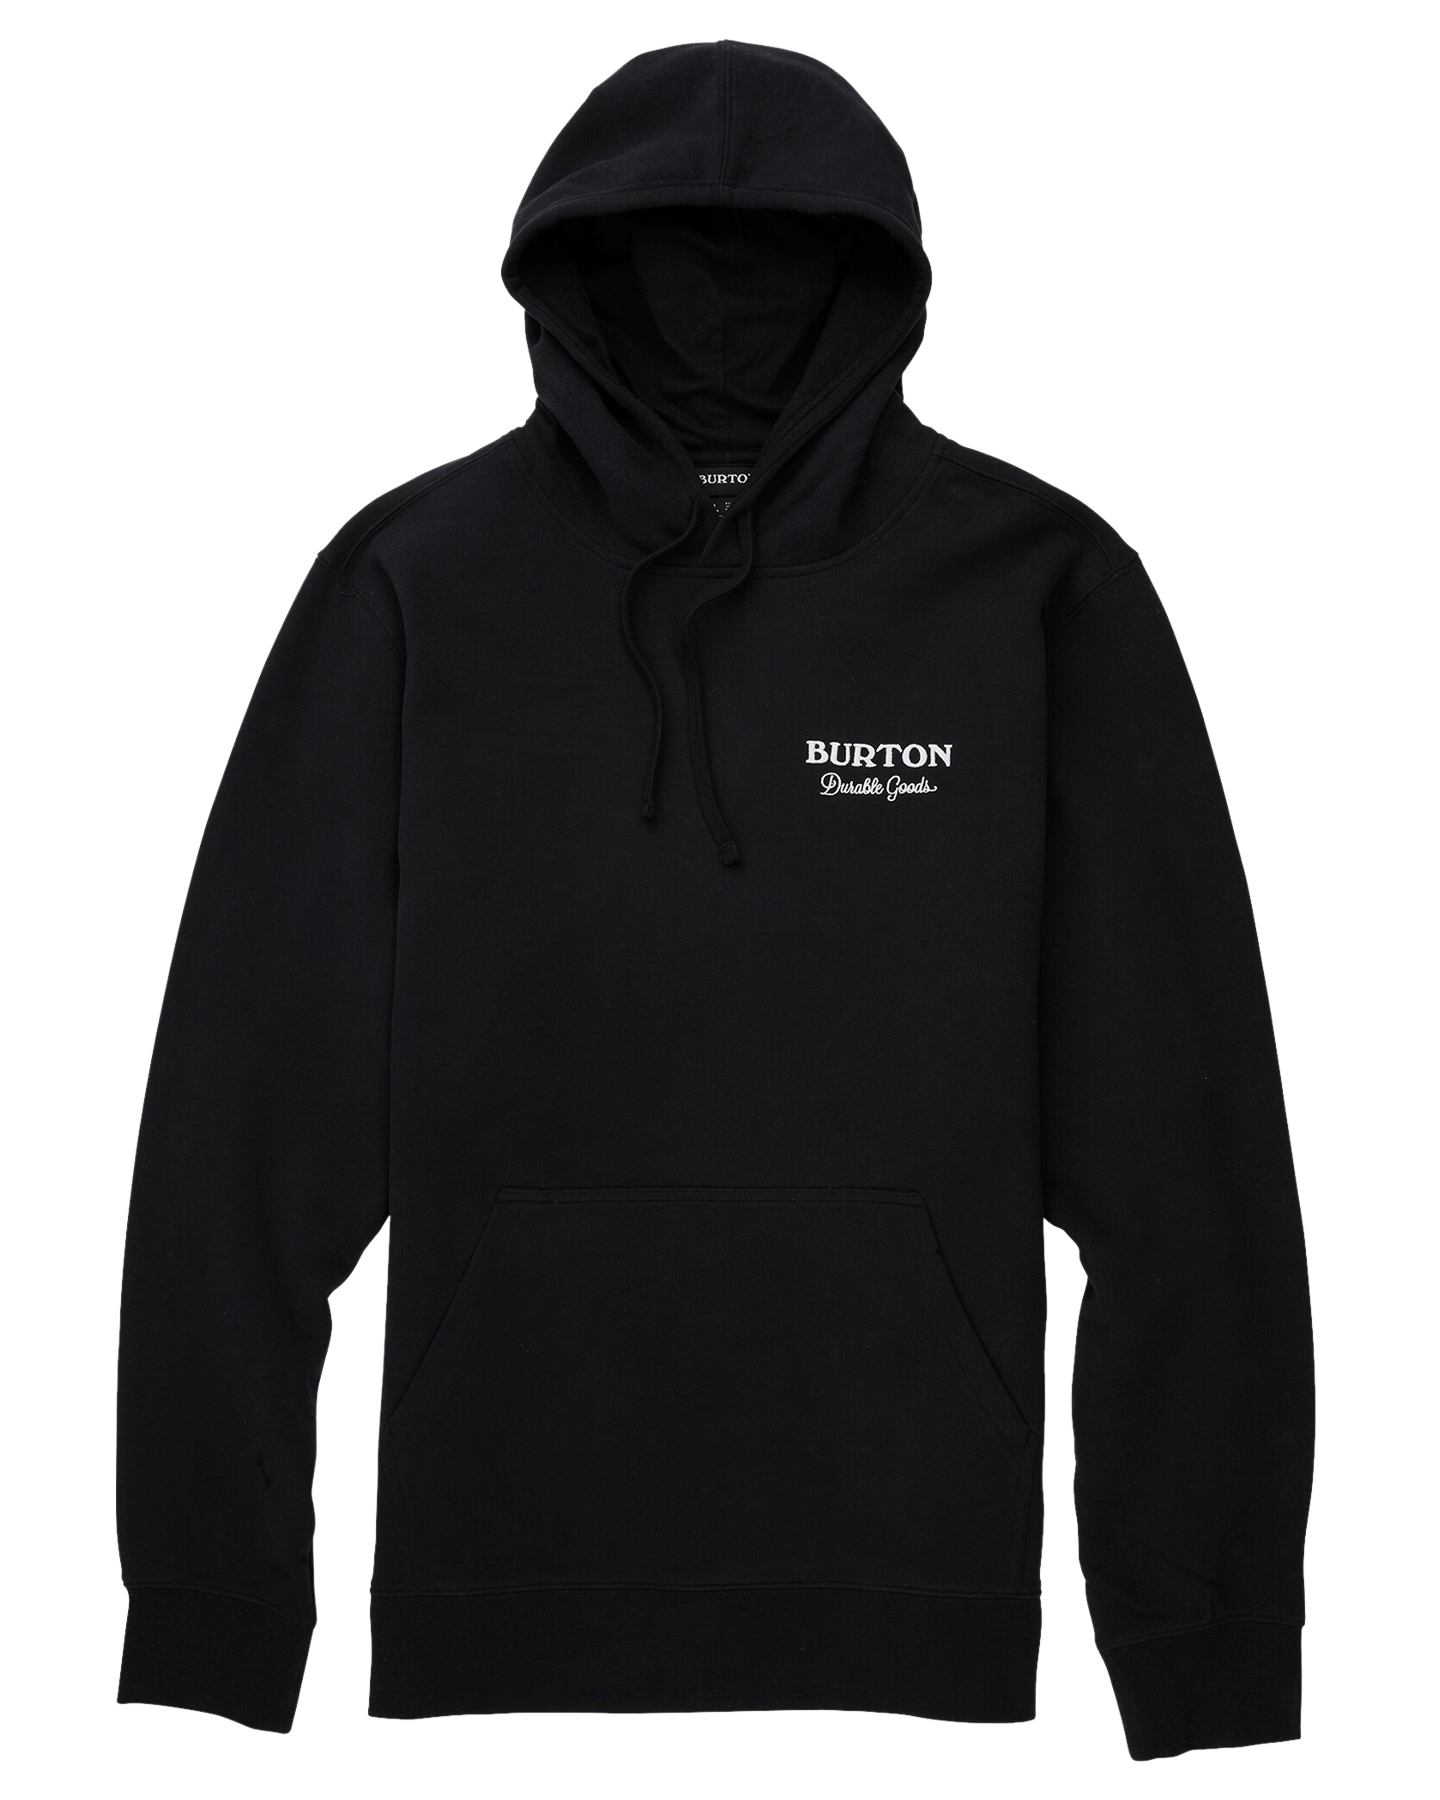 Burton Durable Goods Pullover Hoodie - True Black Hoodies & Sweatshirts - Trojan Wake Ski Snow